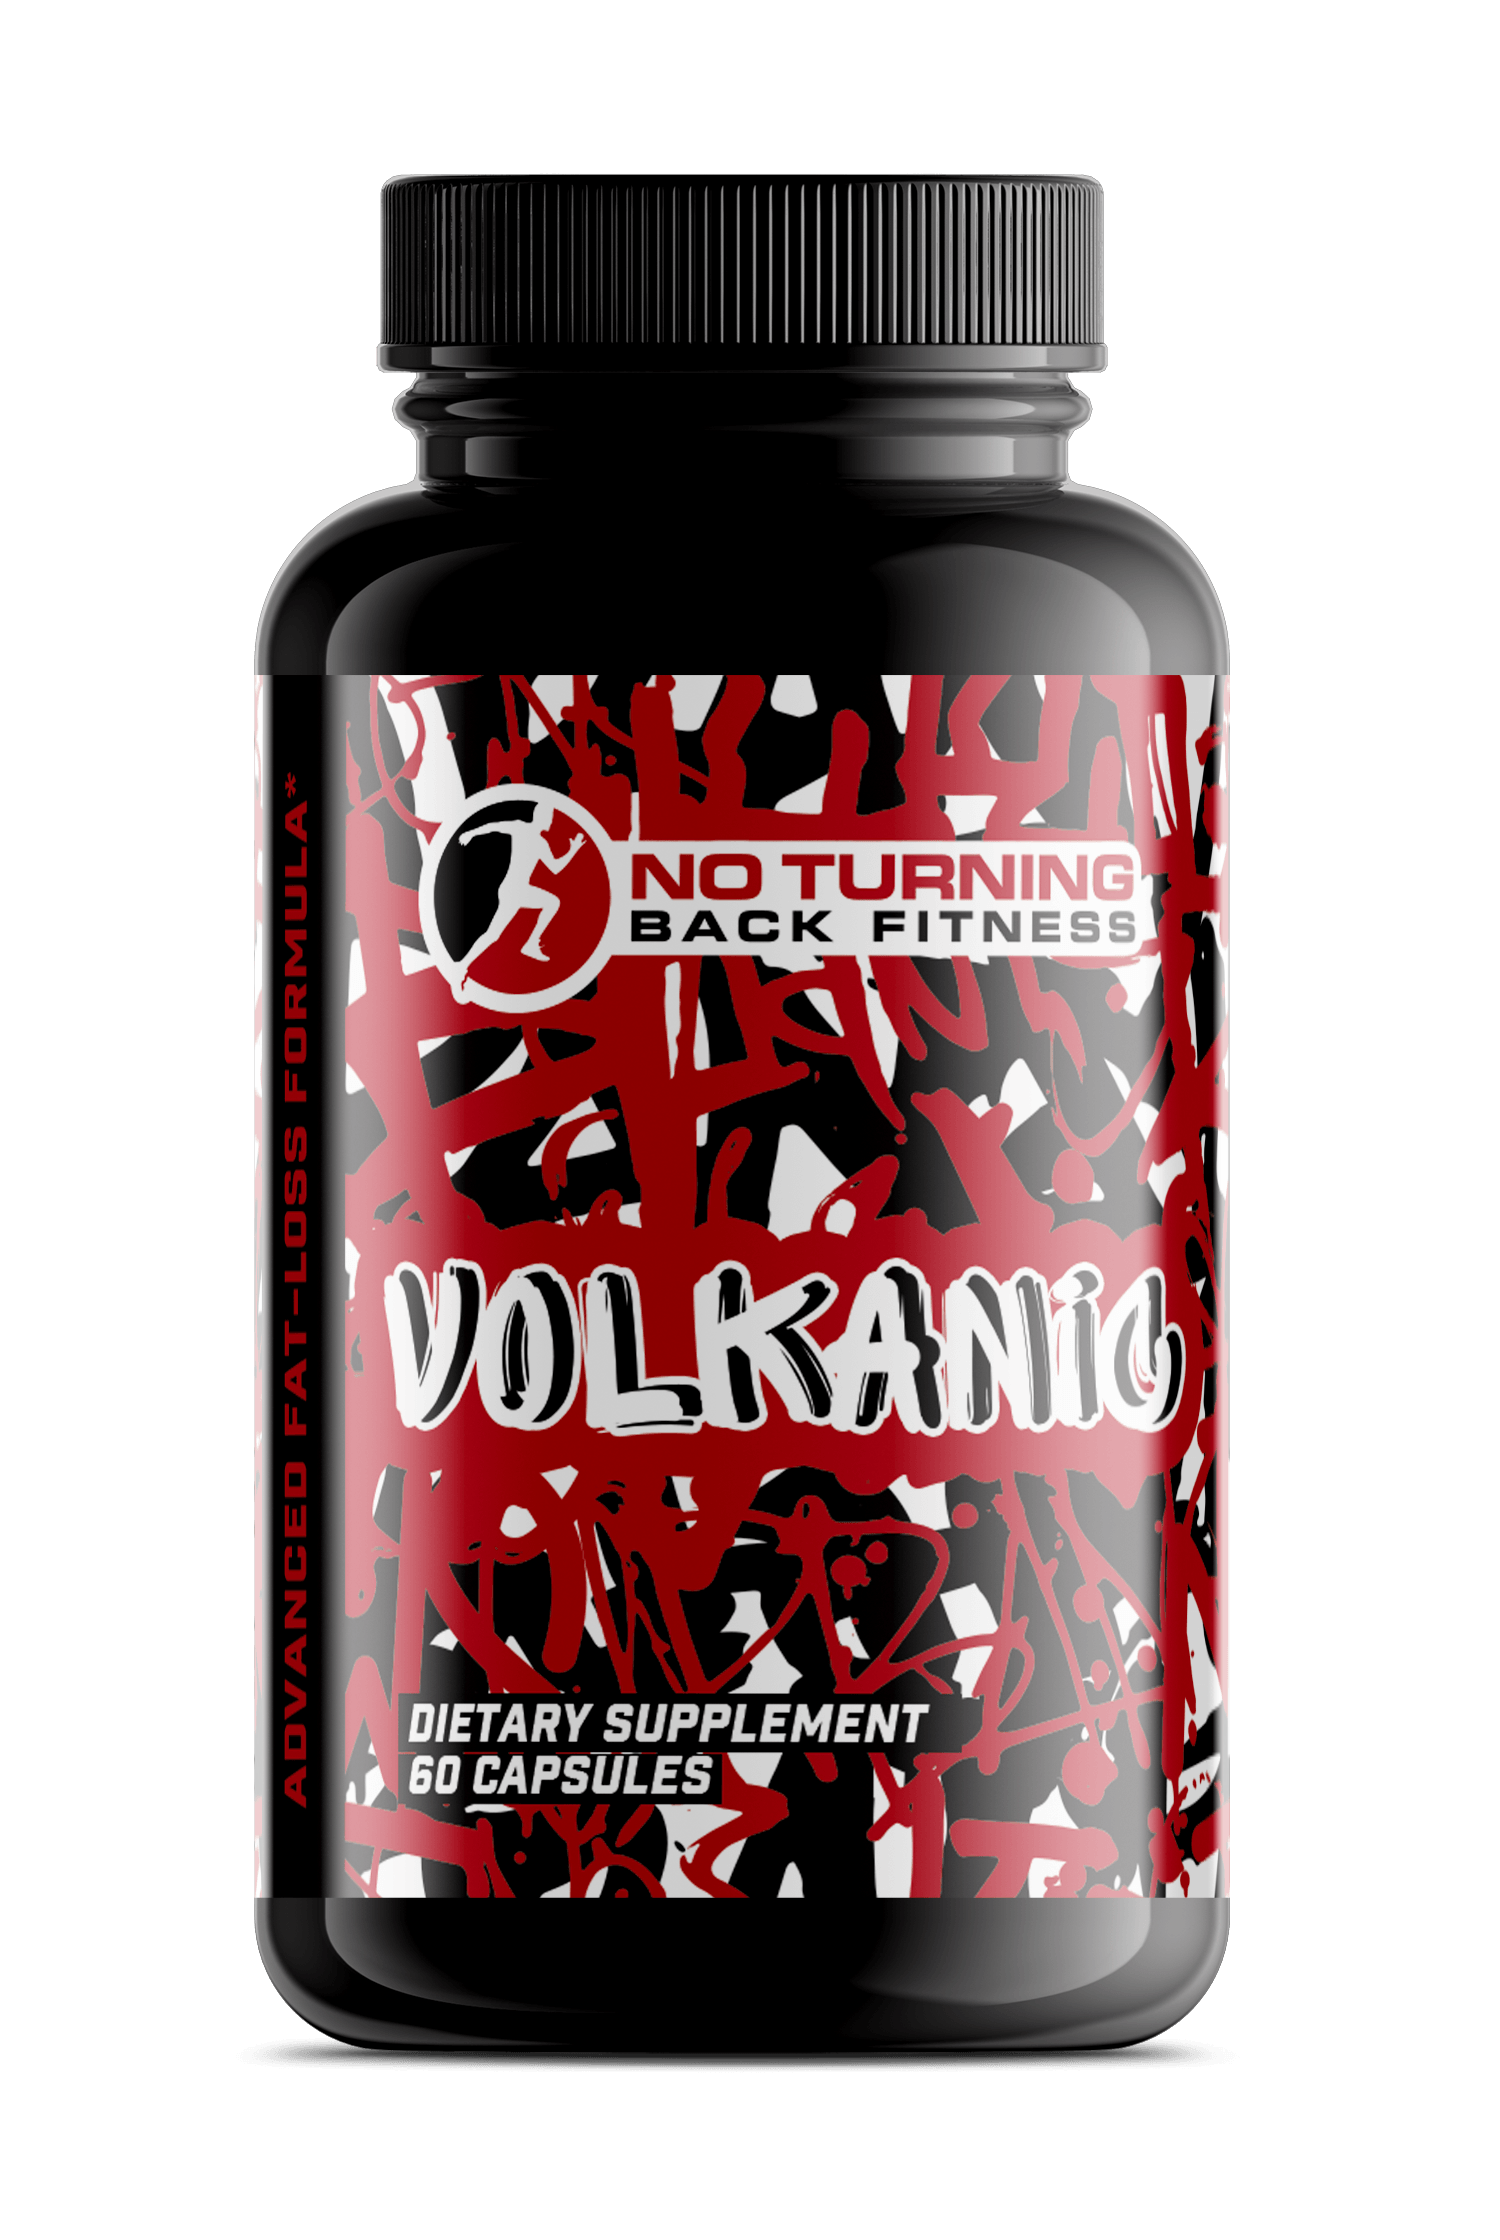 Volkanic - Advanced Fat Loss Formula - No Turning Back Fitness